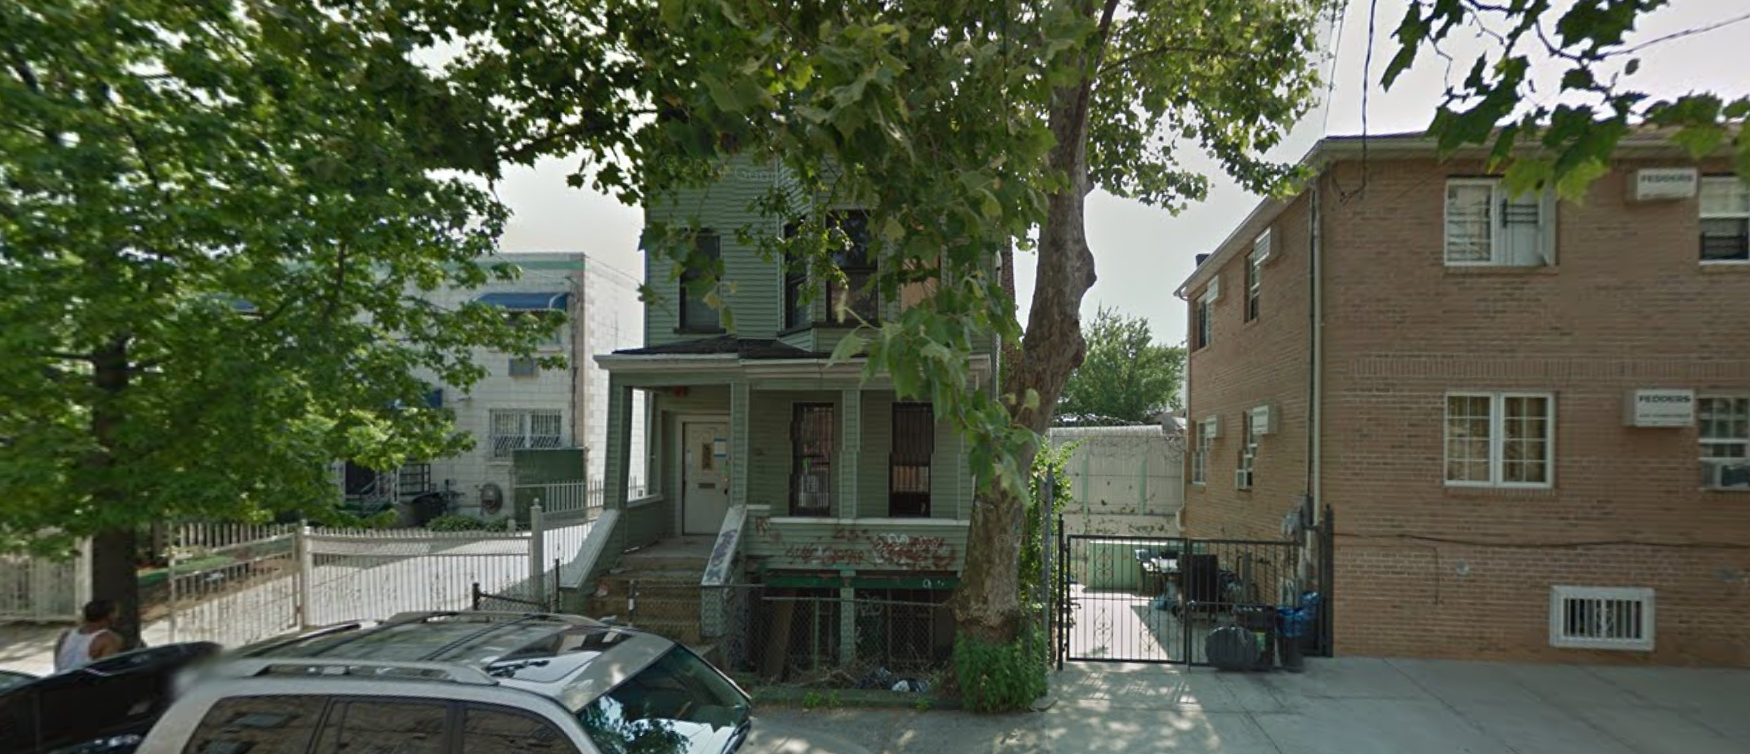 1164 Fox Street, image via Google Maps